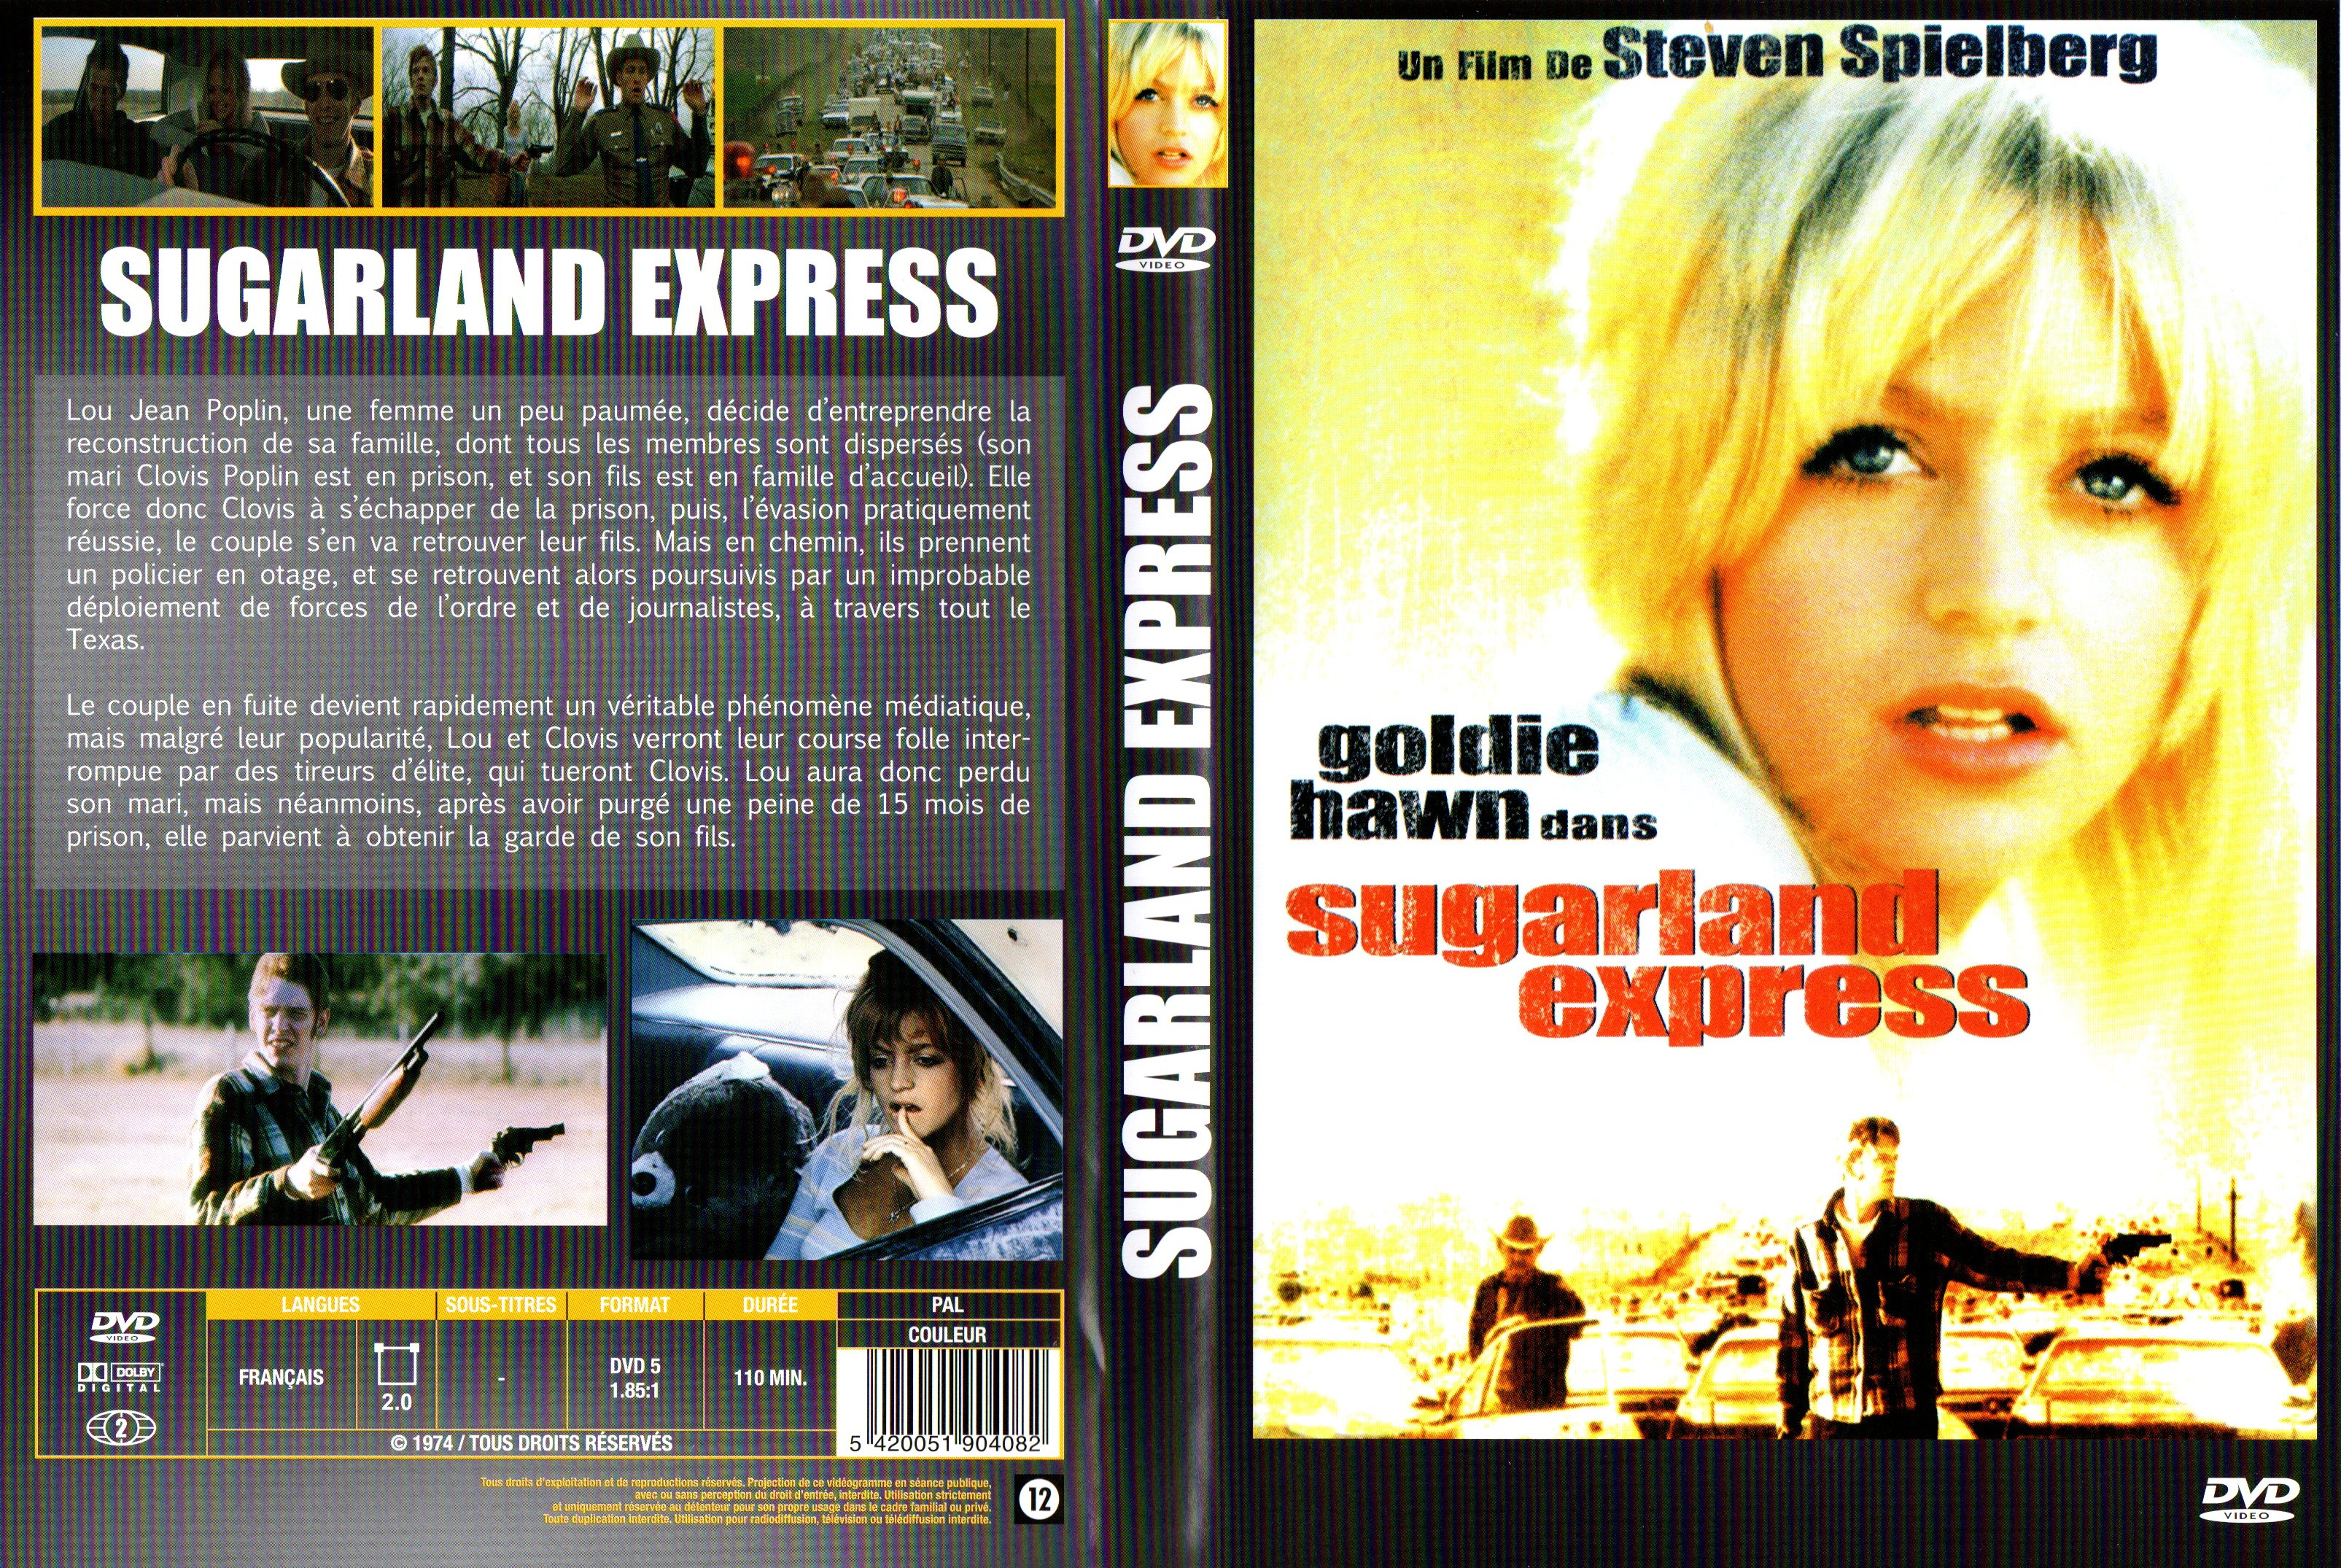 Jaquette DVD Sugarland express v3